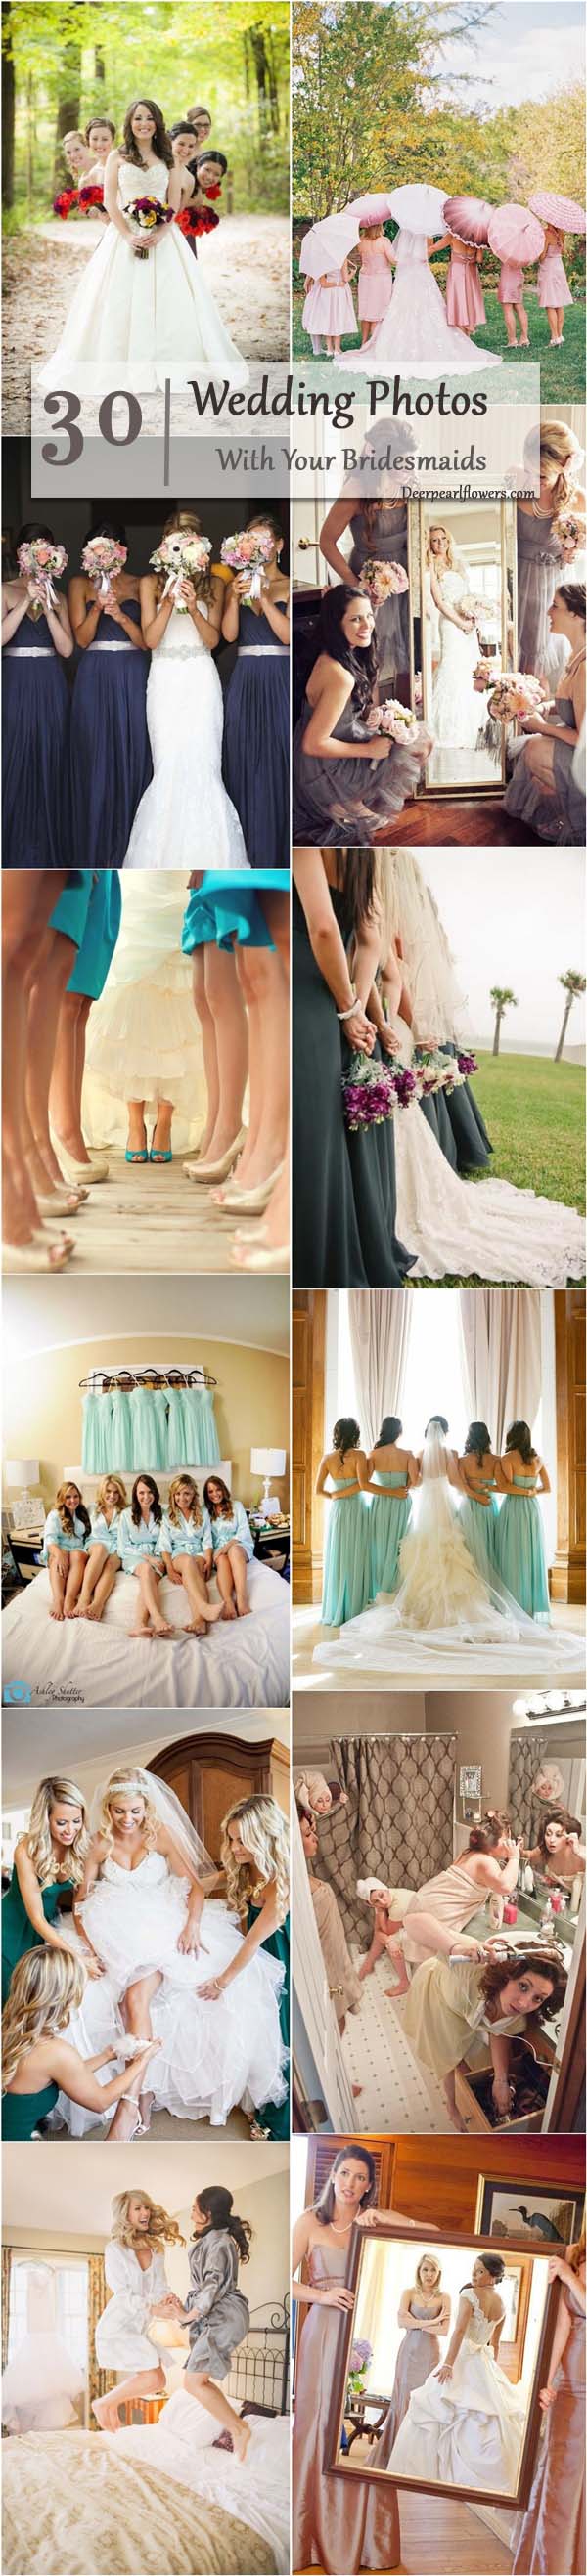 Wedding Photos With Your Bridesmaids